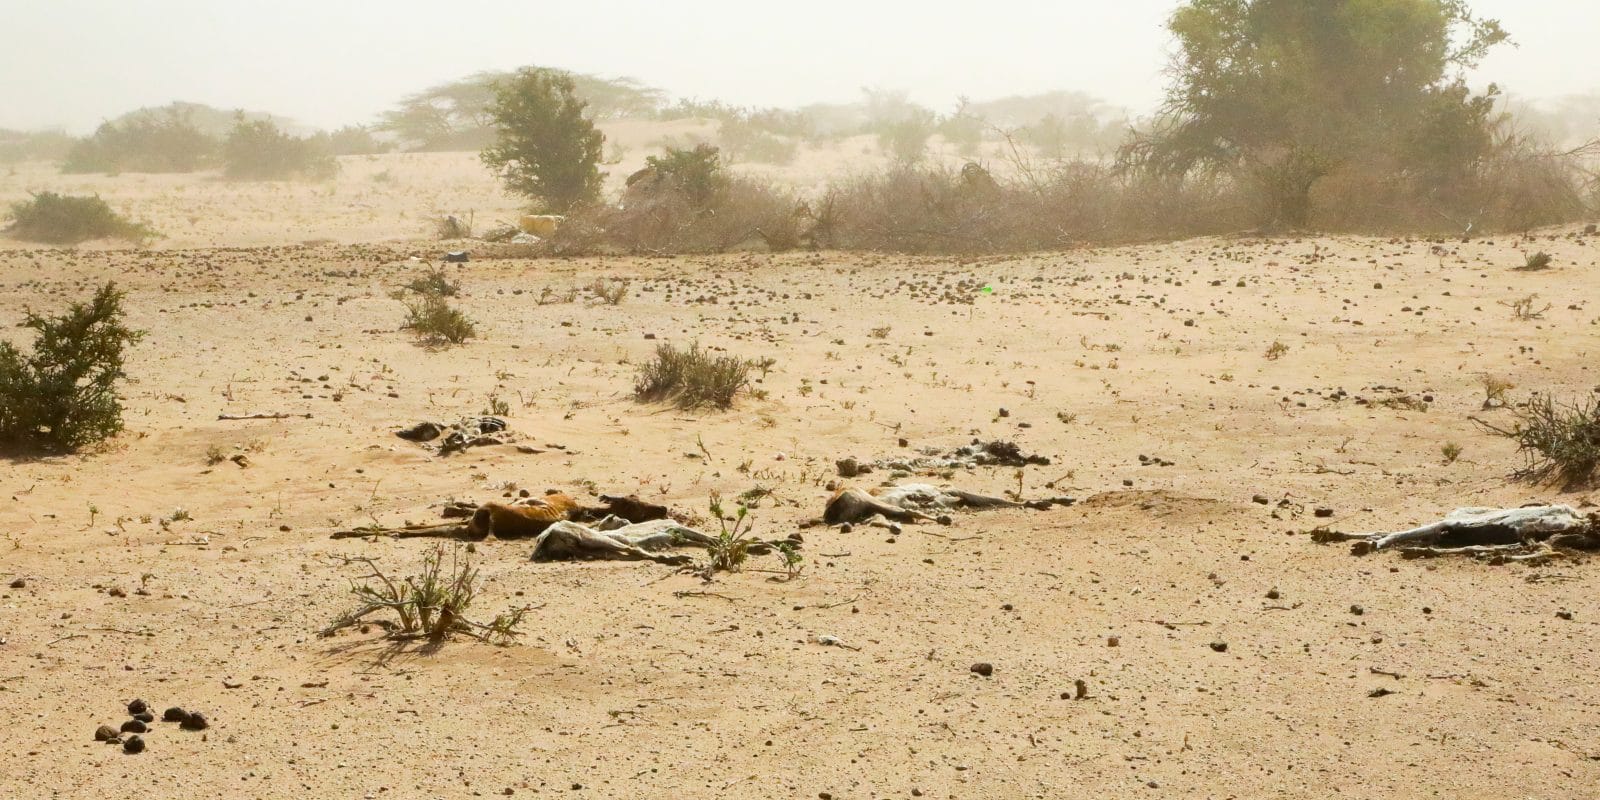 Dead goats in Northern Kenya